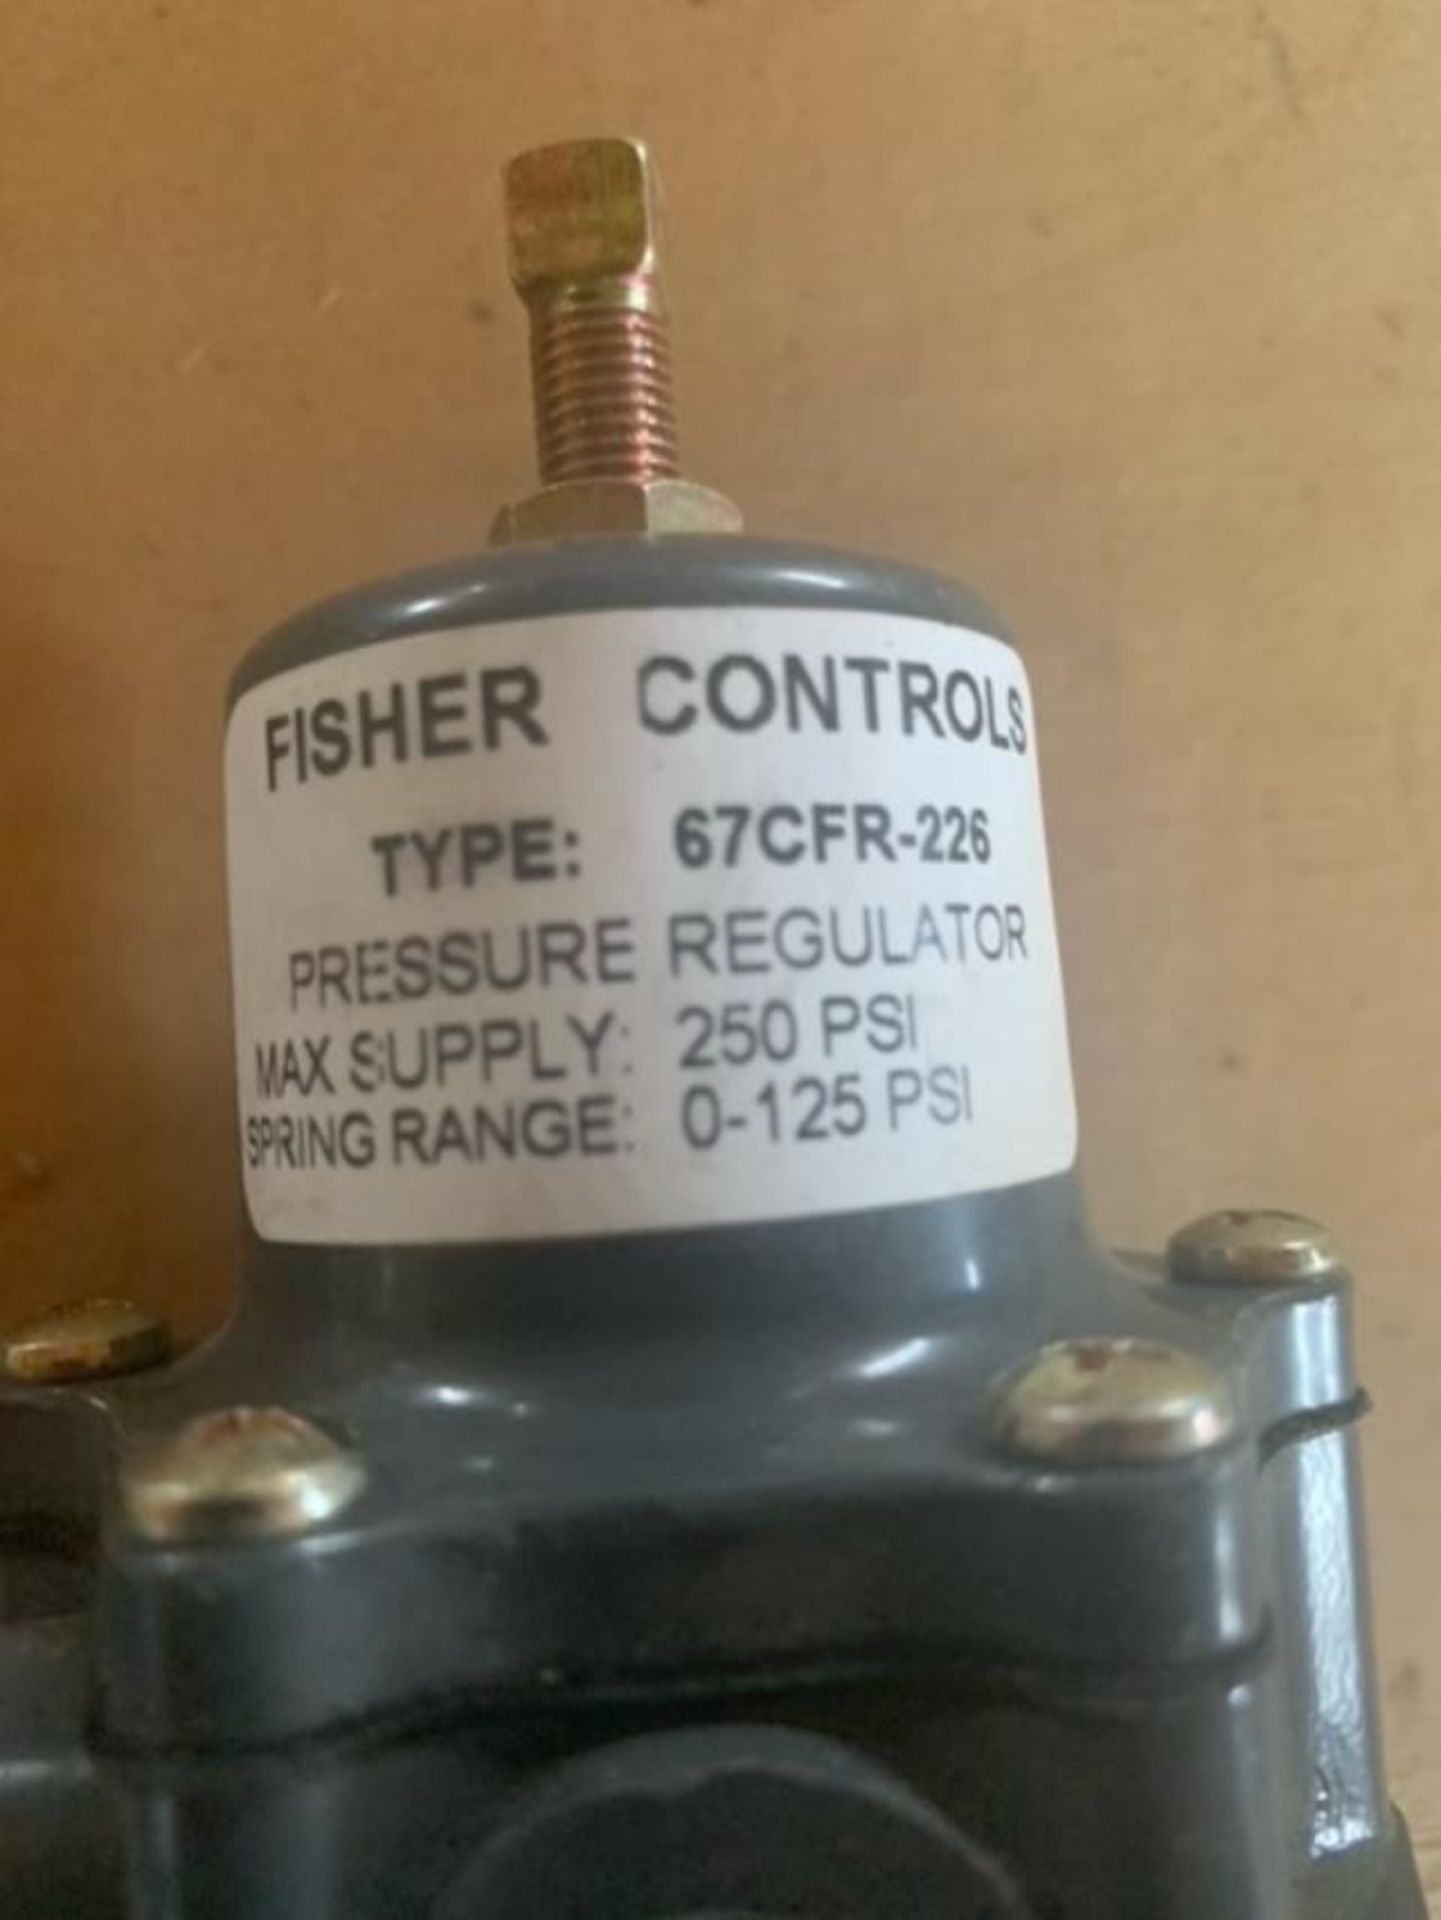 4 X FISHER CONTROLS REGULATOR WITH CASE DRAIN, SPRING RANGE 125 PSI, MAX PRESSURE 250 PSI - Image 6 of 6